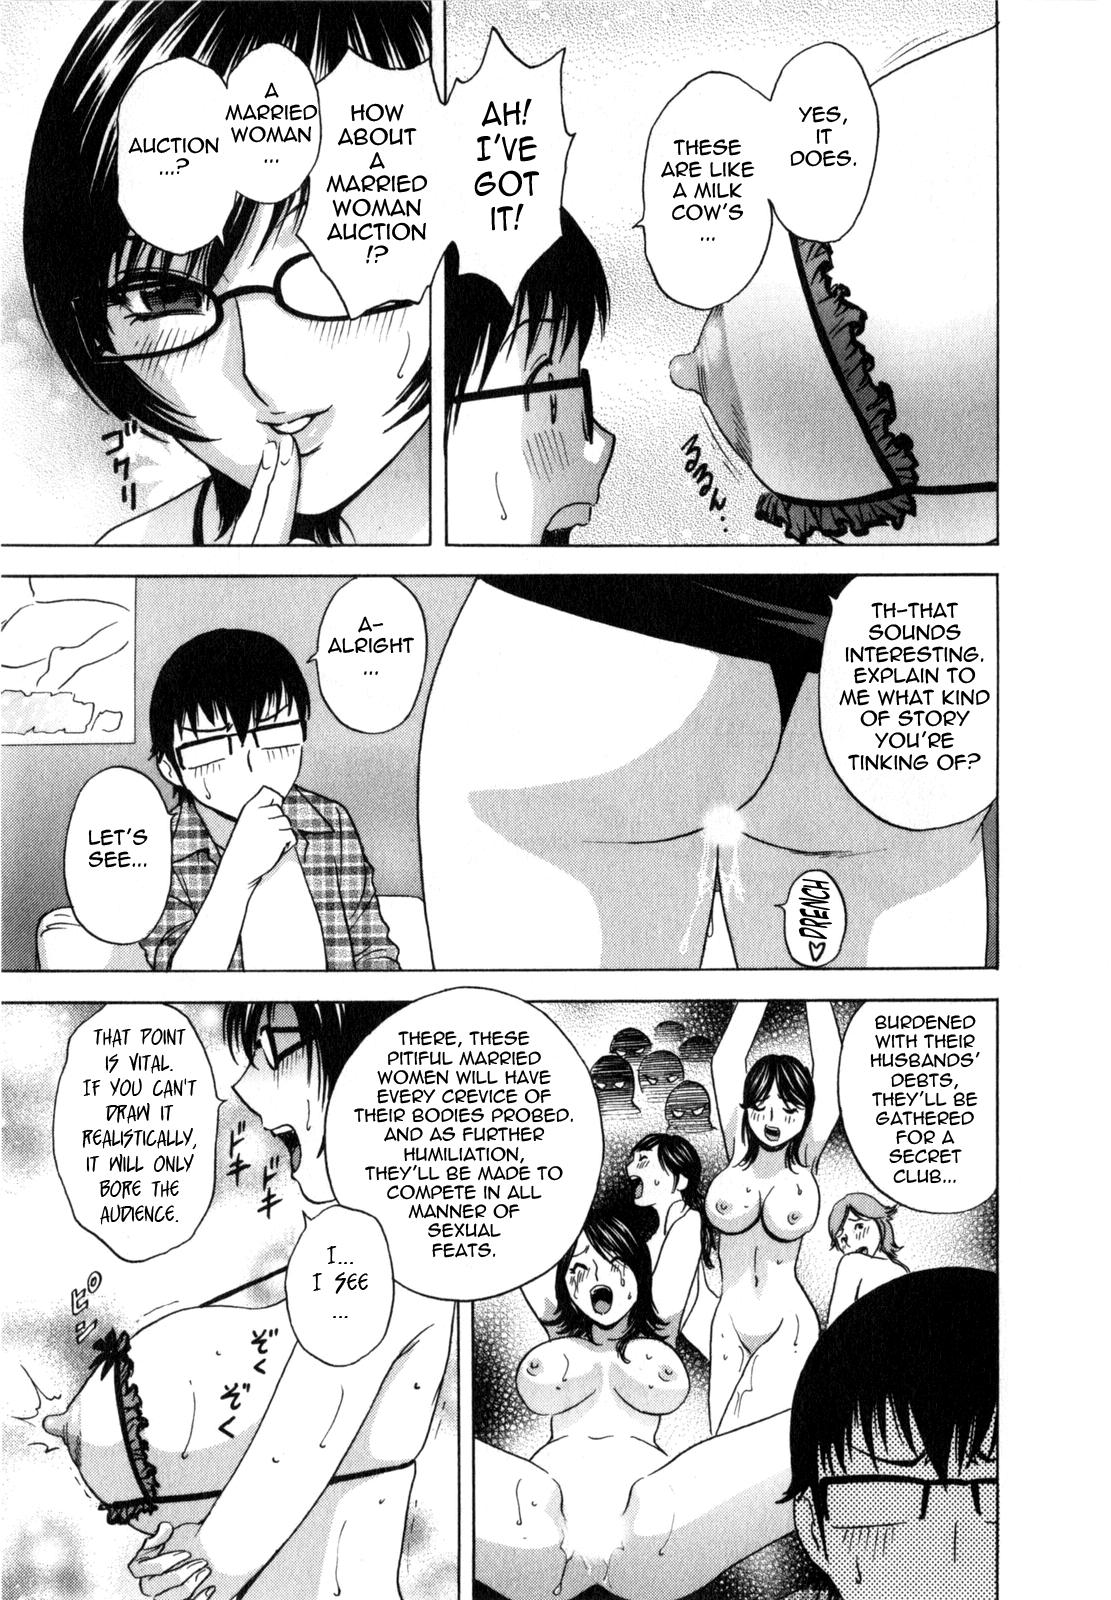 [Hidemaru] Life with Married Women Just Like a Manga 1 - Ch. 1-9 [English] {Tadanohito} 169